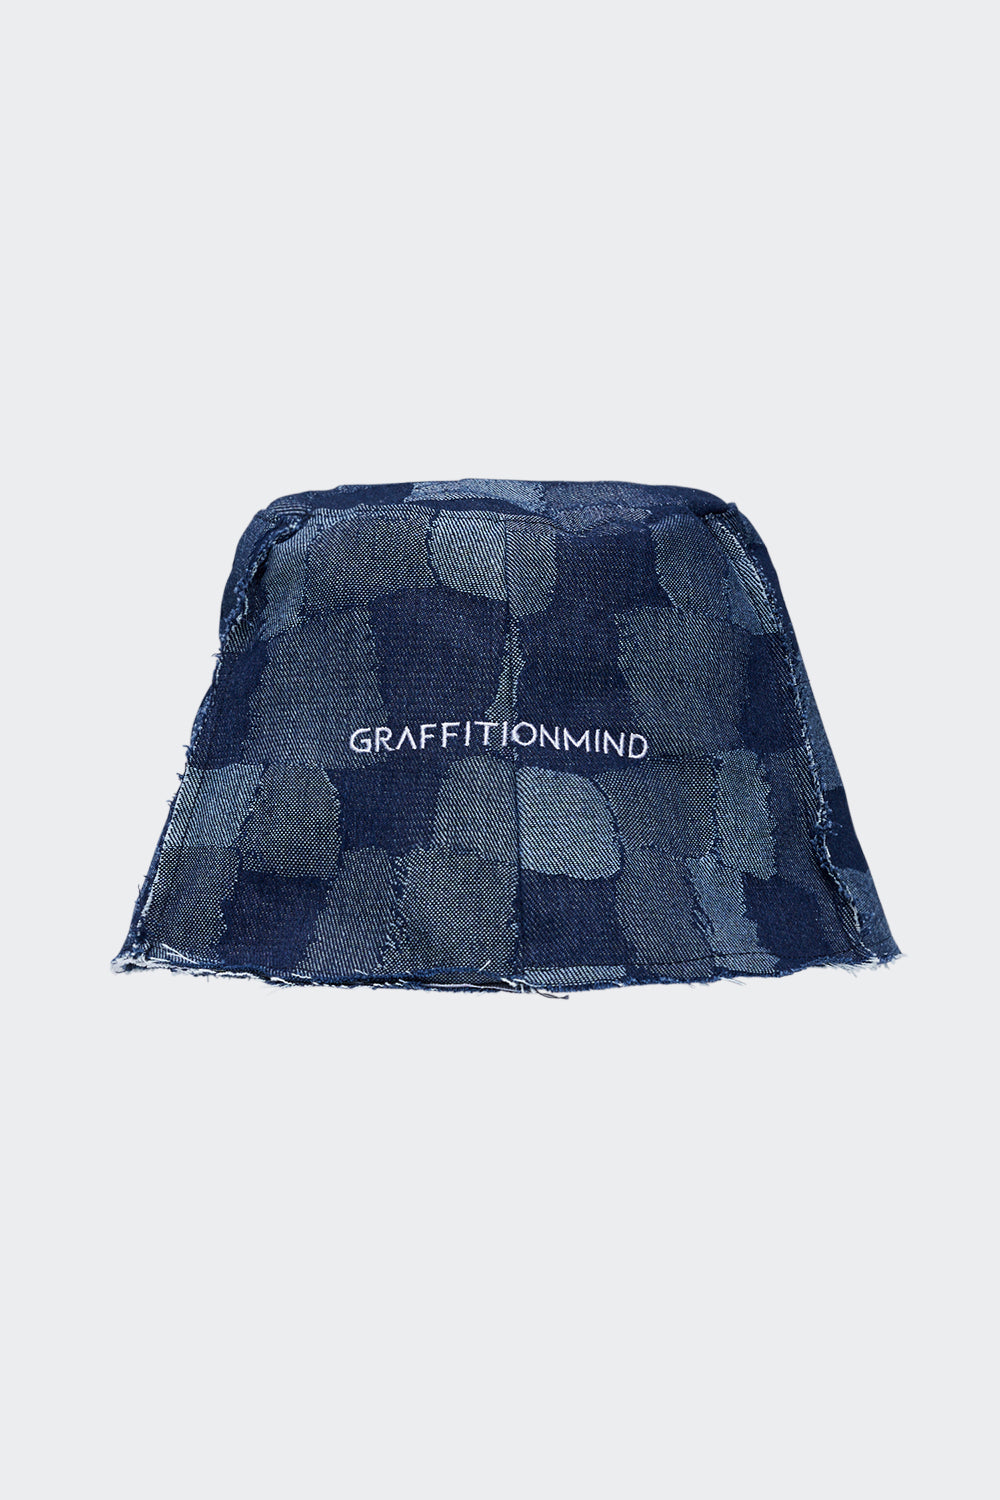 GRAFFITIONMIND（グラフィティオンマインド） Denim Patchwork Bucket Hat / Dark Blue